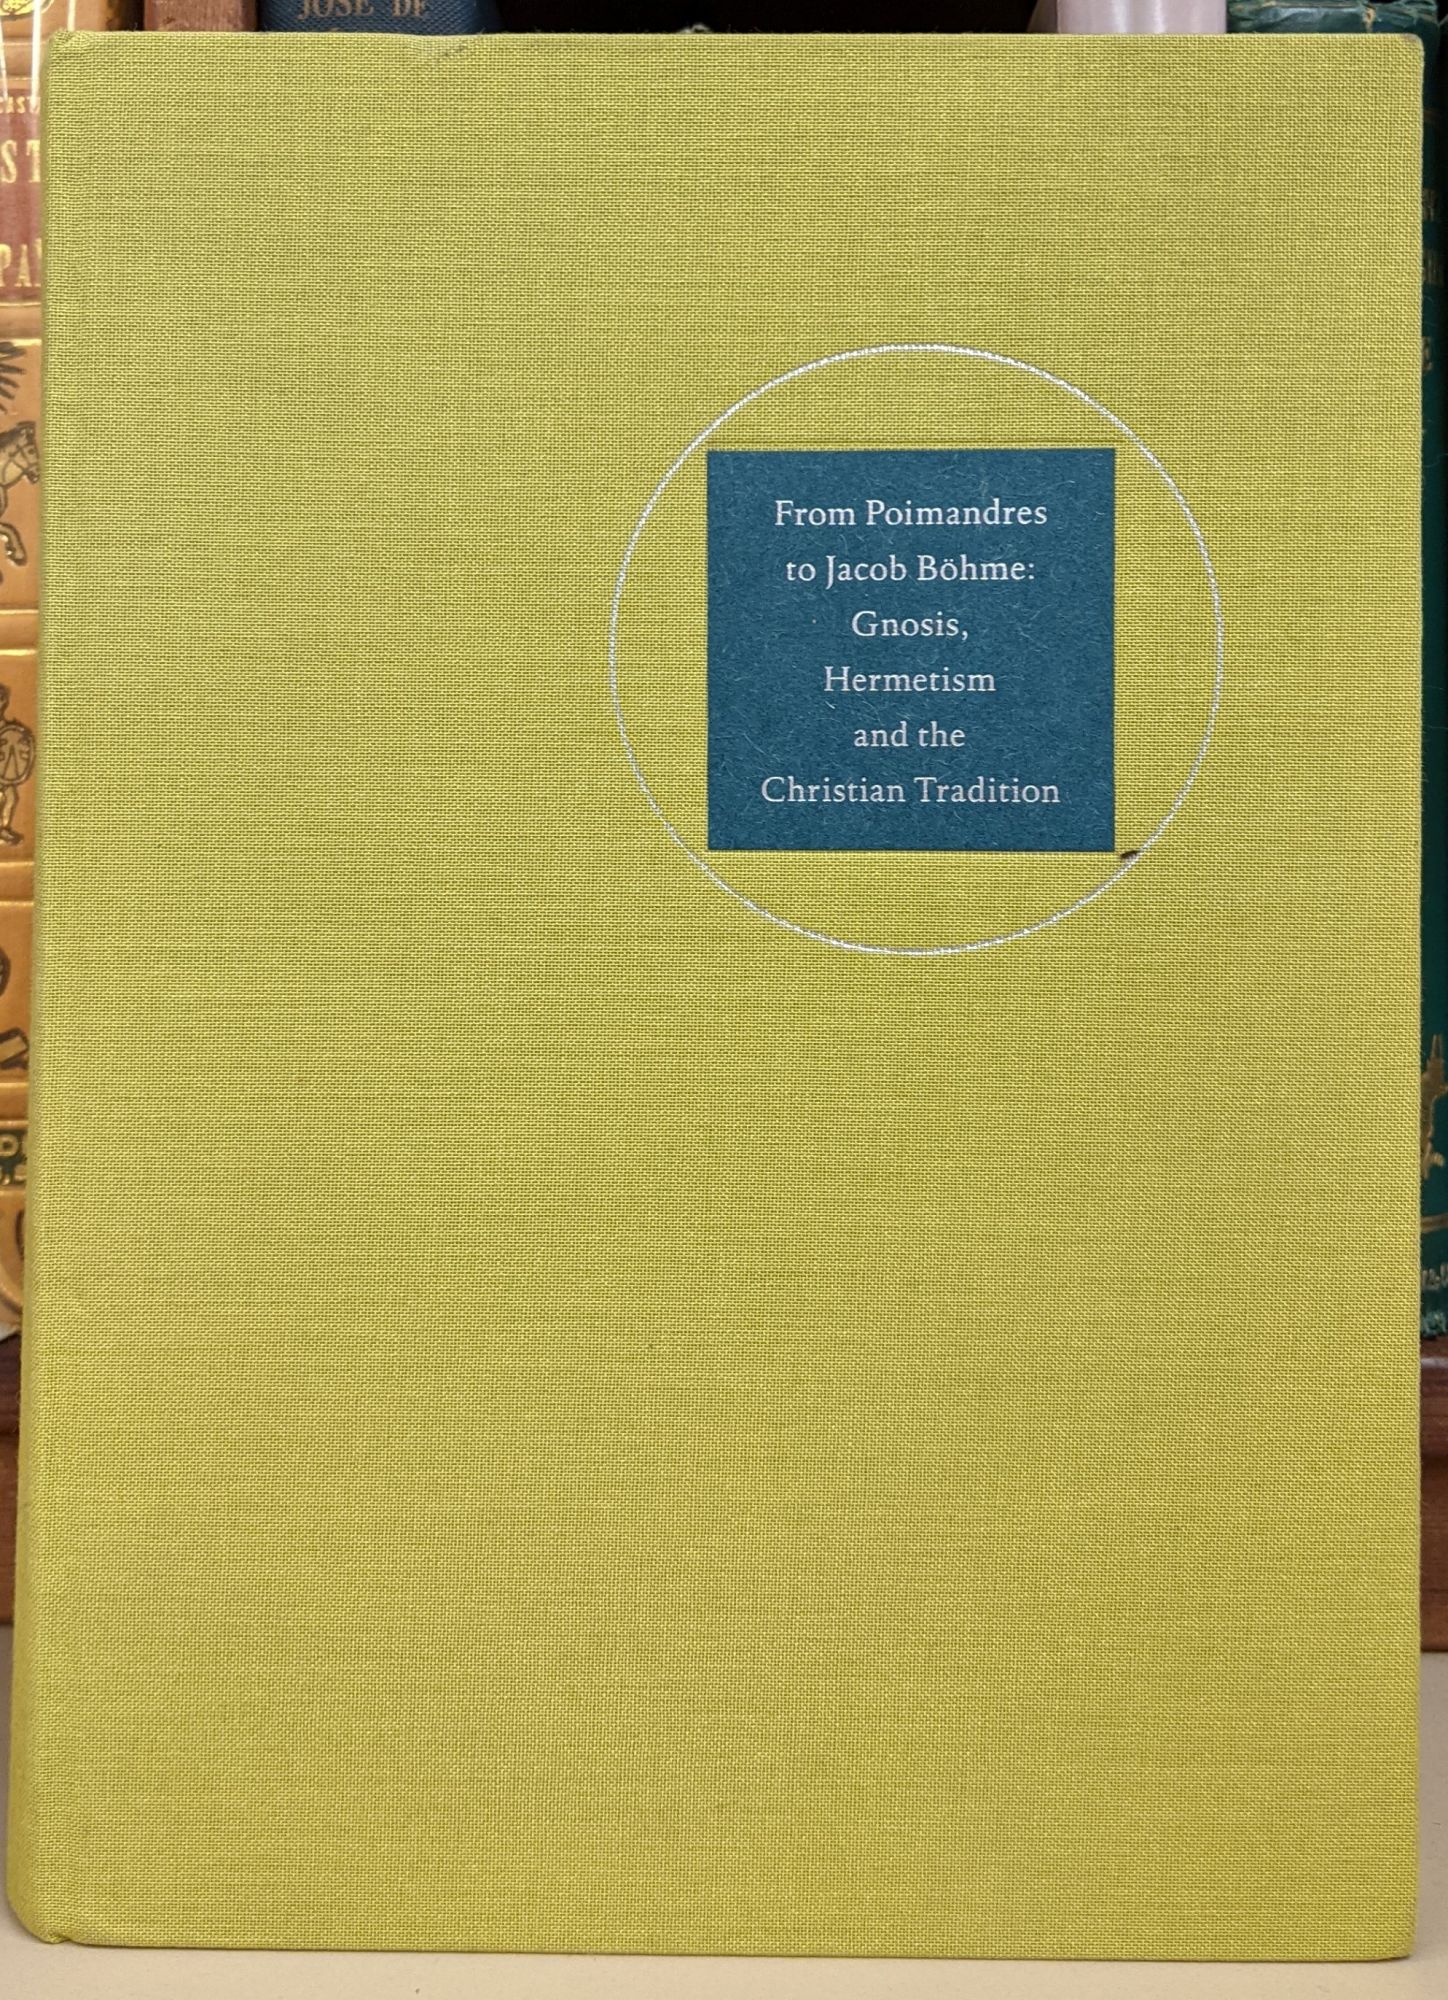 From Poimandres to Jacob Bohme: Gnosis, Hermerism and the Christian Tradition - Roelof van den Brock; Cis van Heertum (eds)